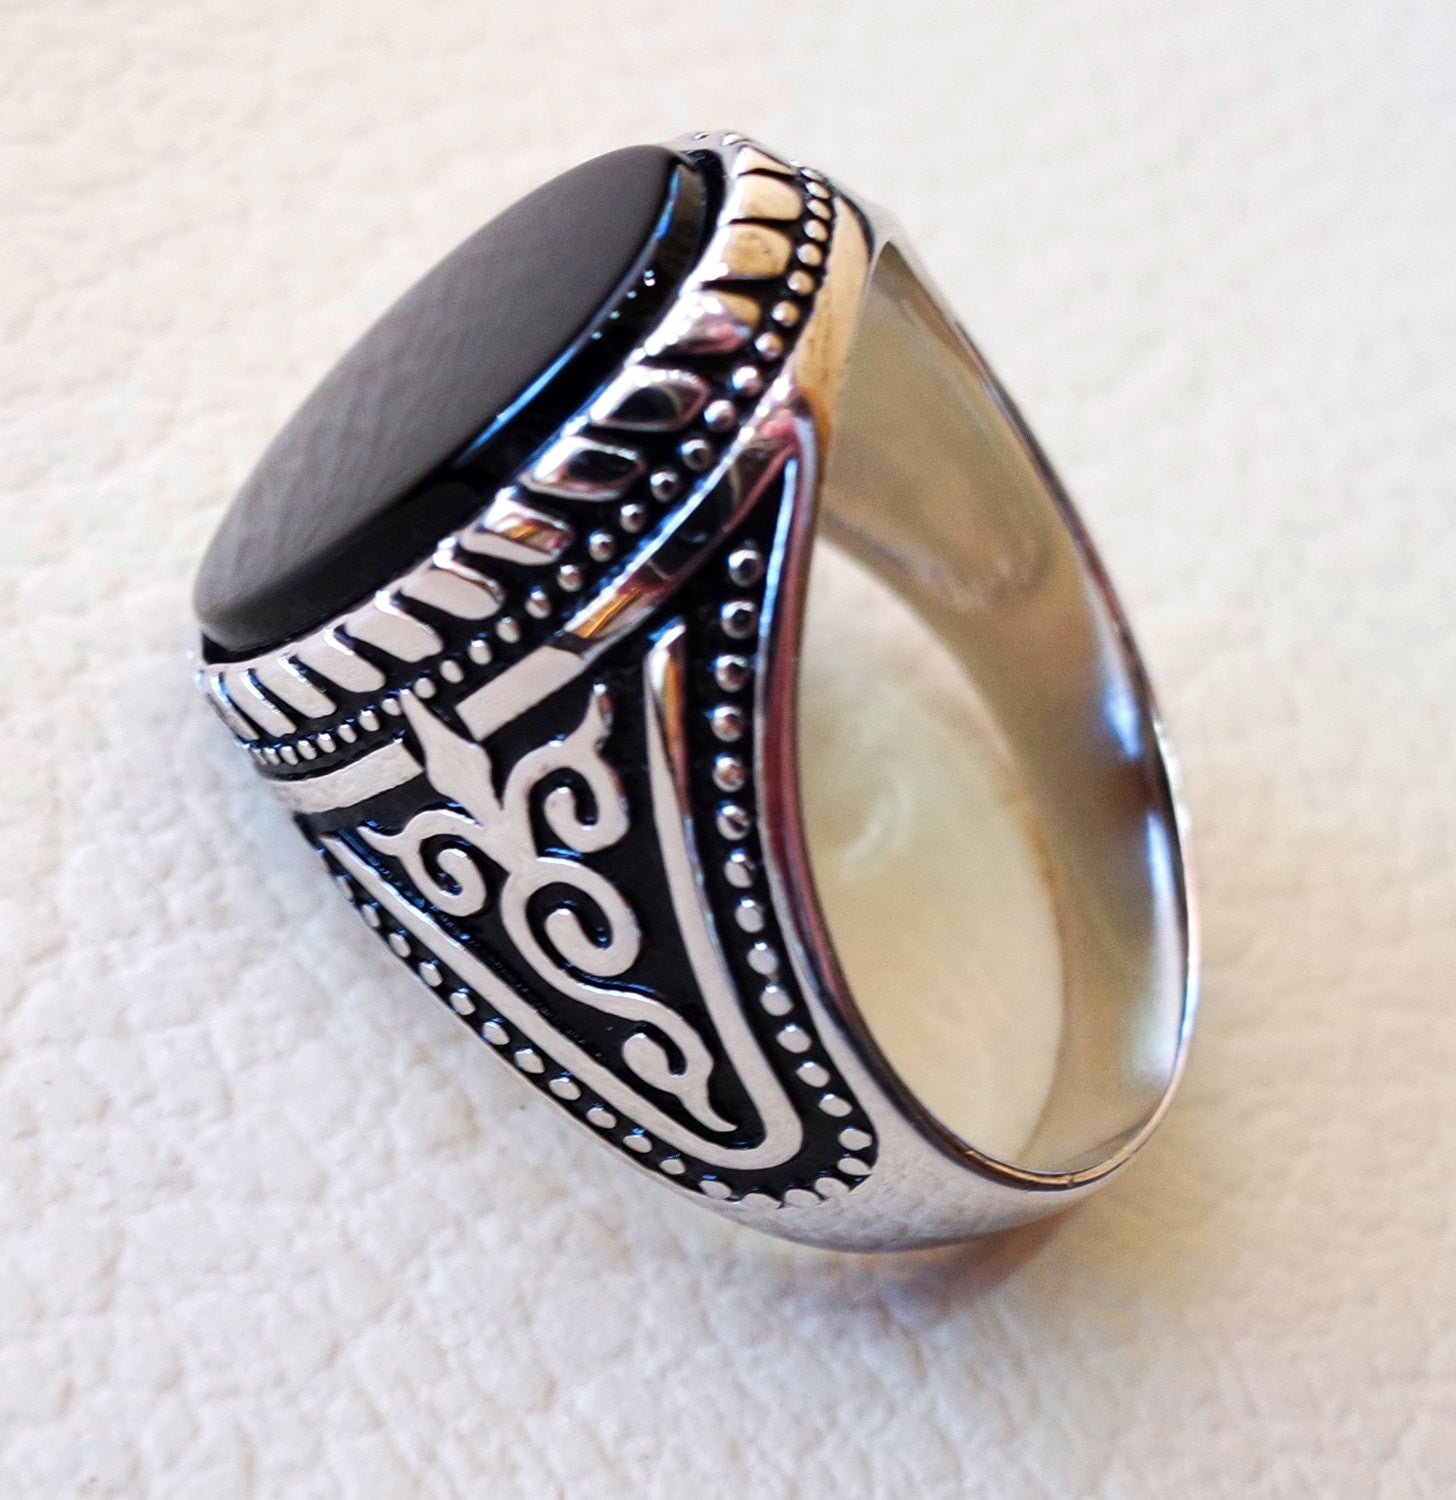 flat black onyx agate aqeeq stone arabic turkish ottoman style man ring all  sizes sterling silver 925 oval gem shape antique jewelry